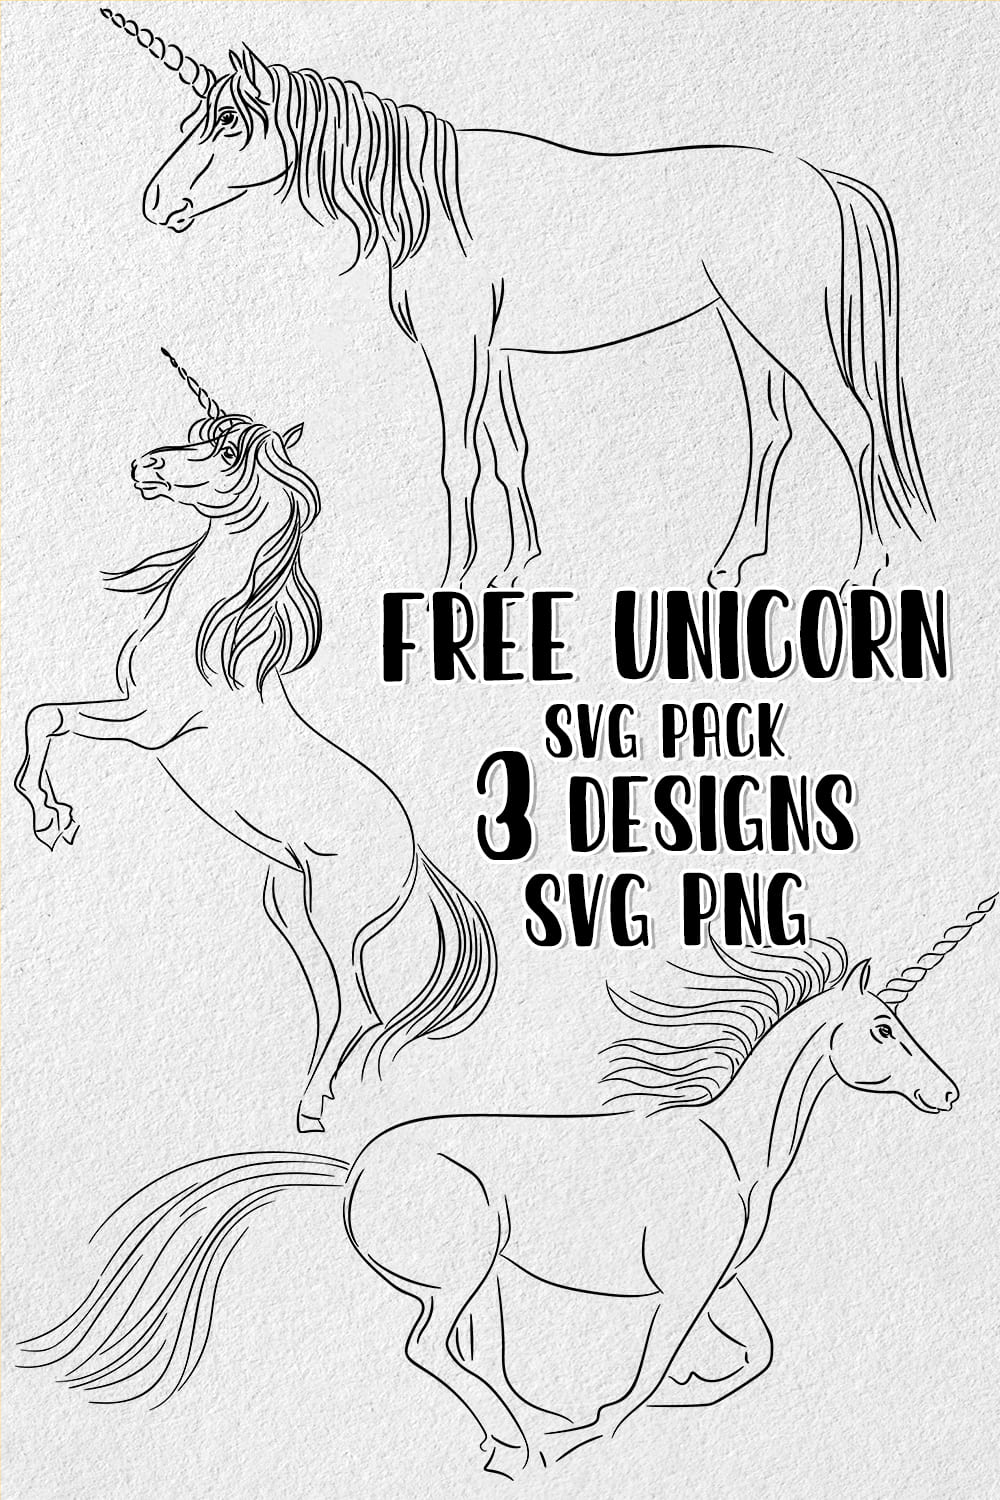 Free unicorn SVG - pinterest image preview.